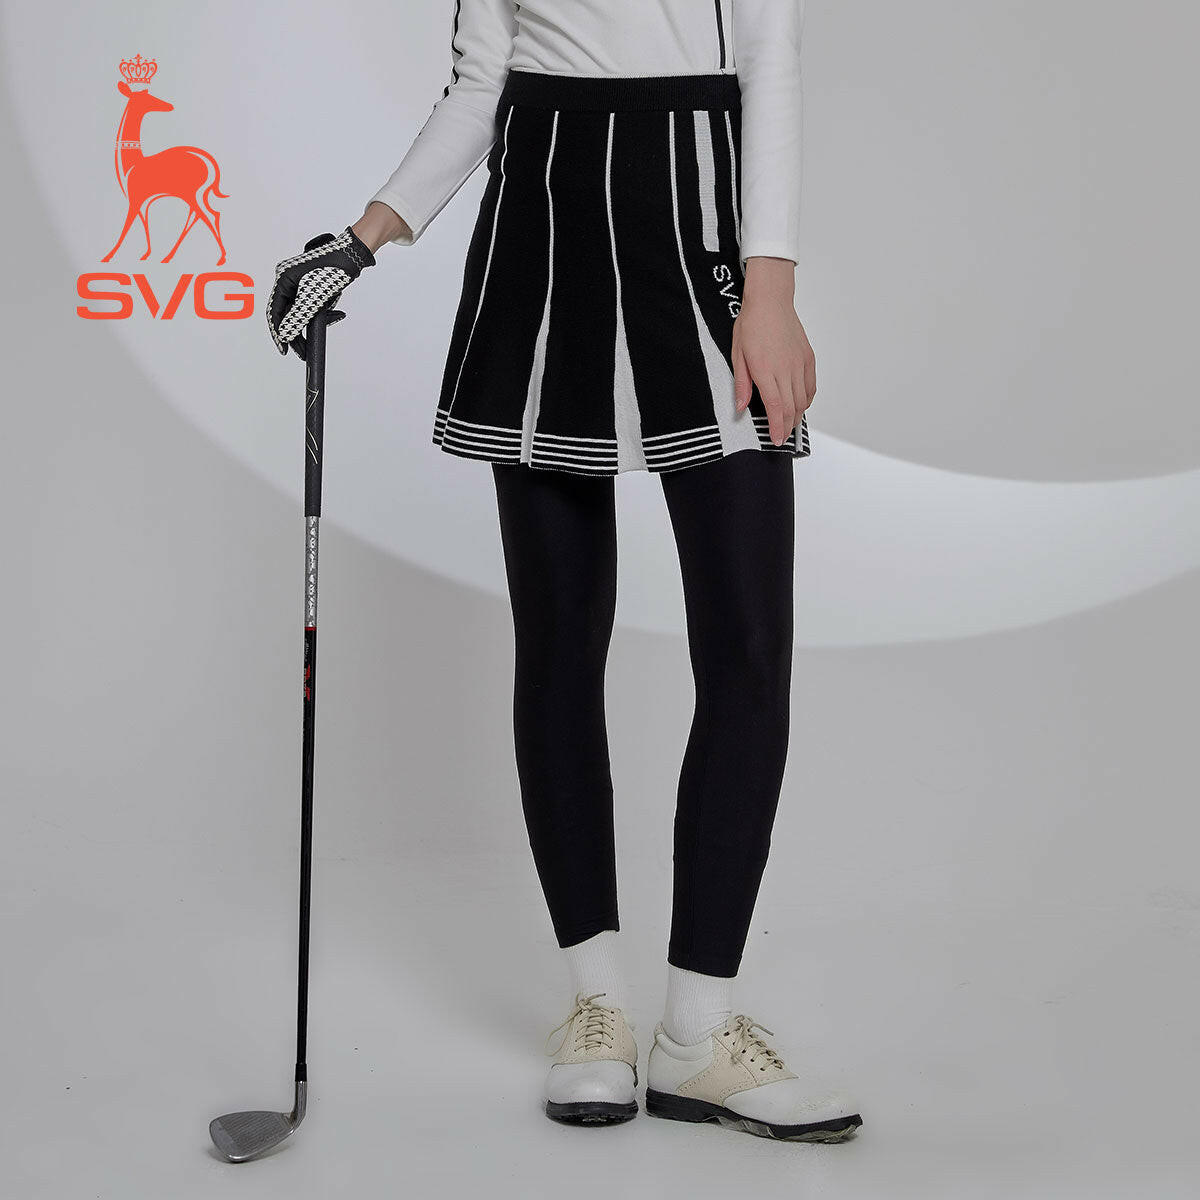 SVG Warm Fleece Golf Skort Leggings Athletic